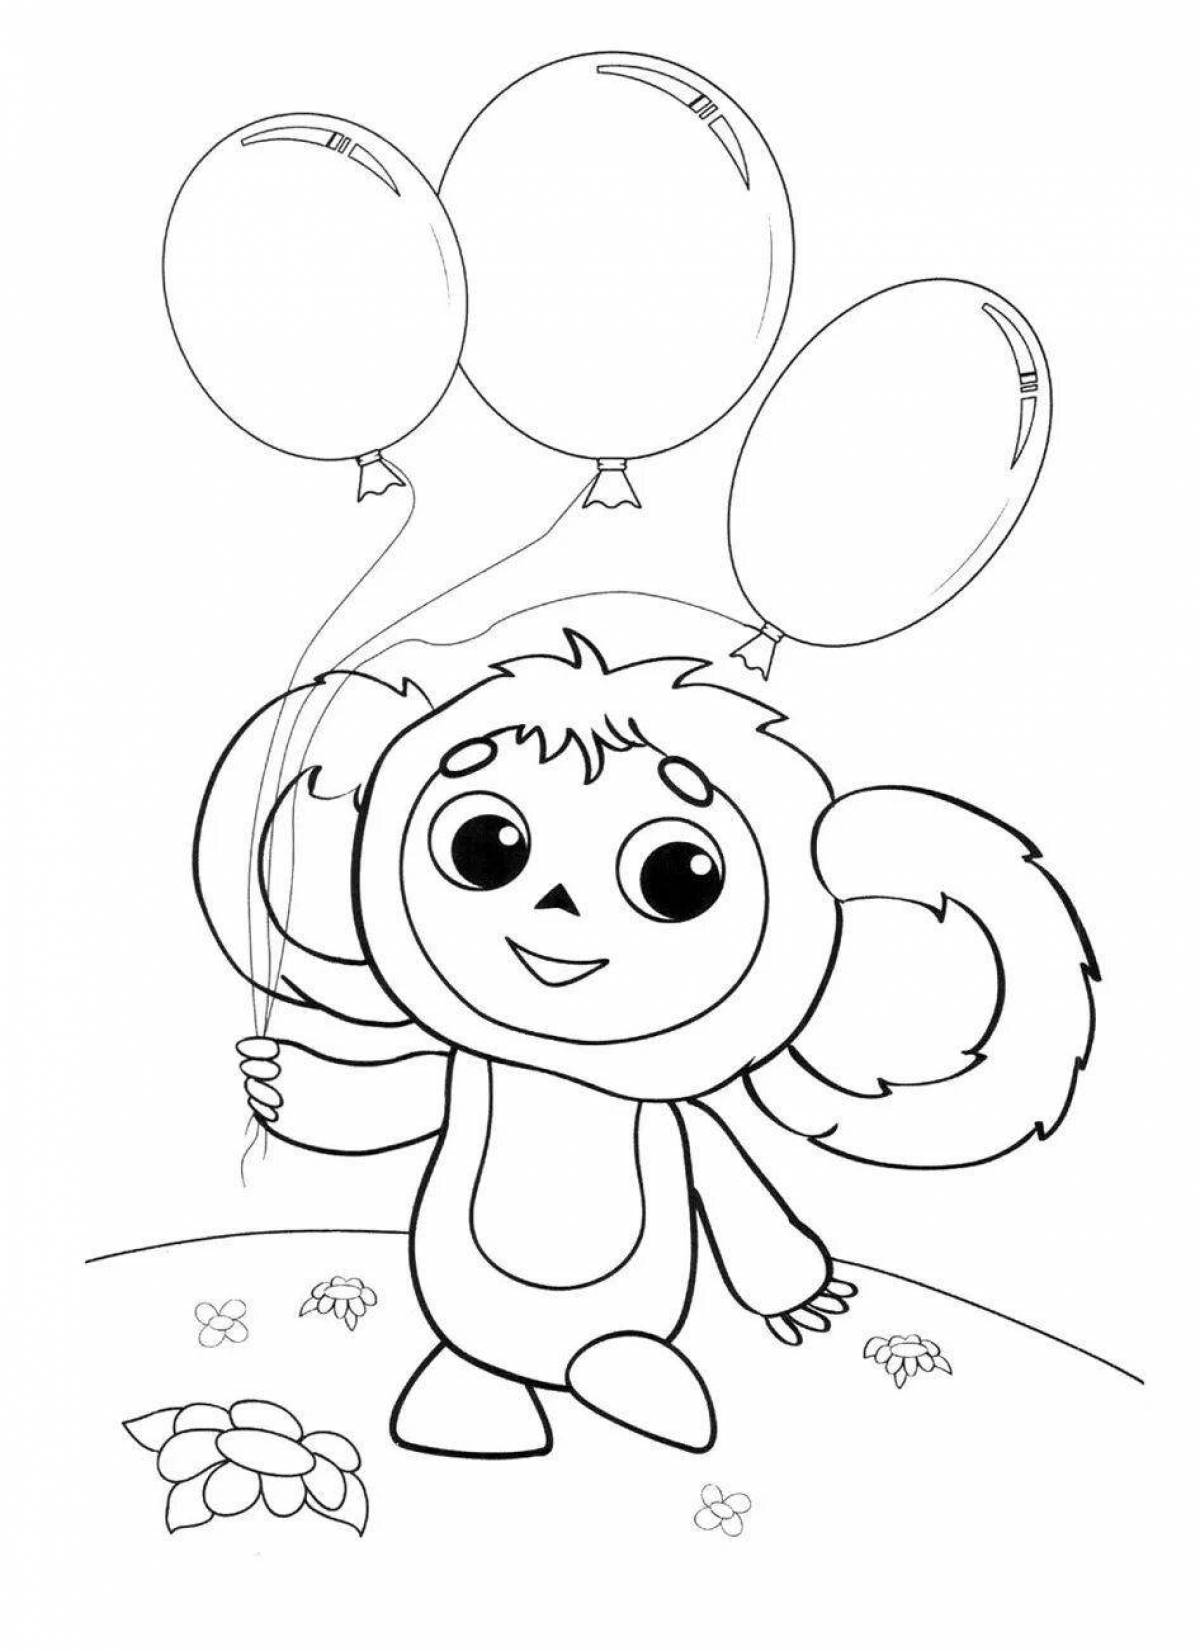 Adorable cheburashka coloring book for preschoolers